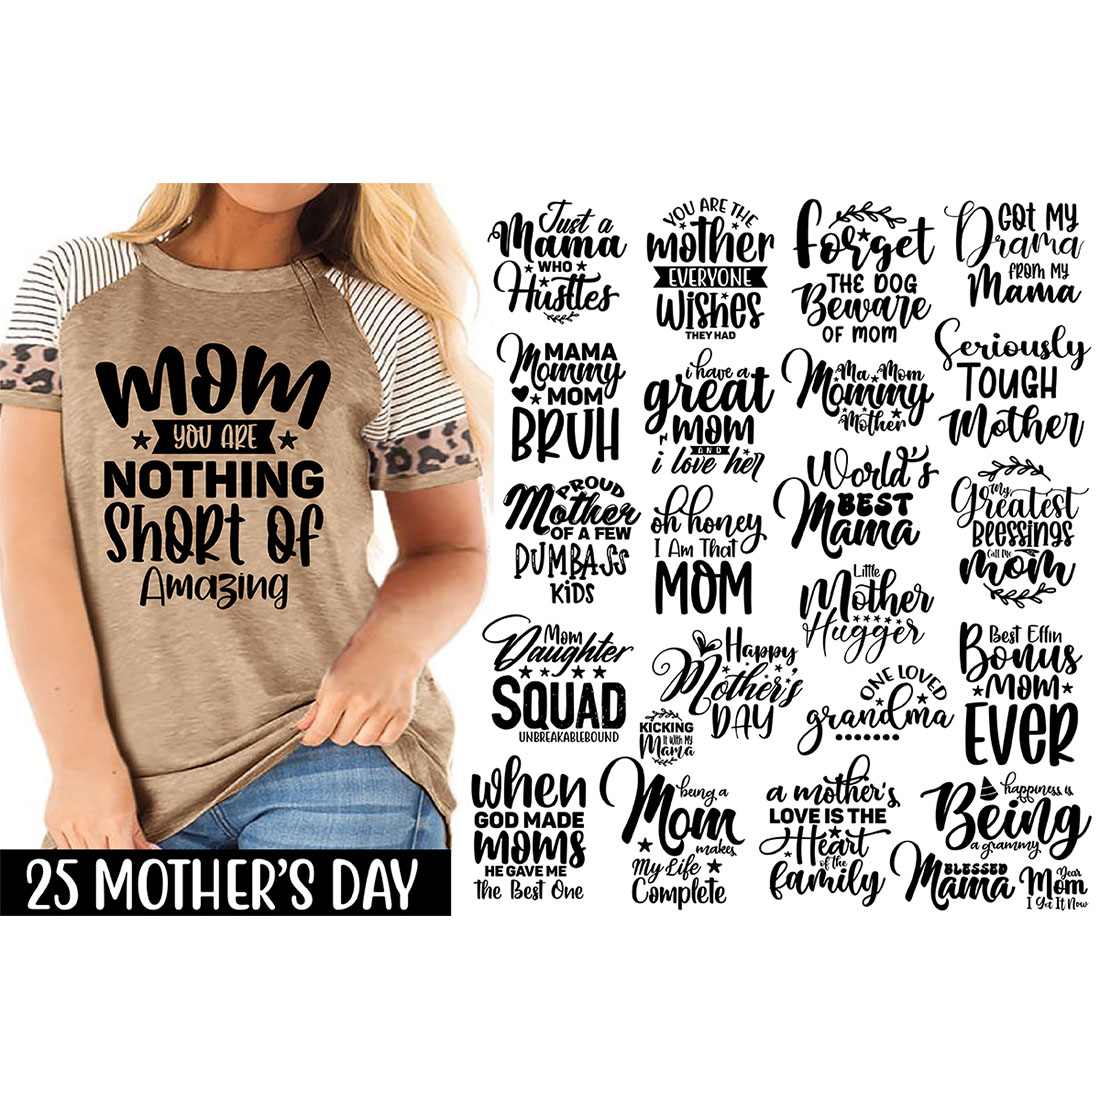 Women's Day SVG Bundle,Women's Day SVG designs,Girl power designs, SVG files,Digital downloads, Mom Bundle SVG, Mother's Day Svg, preview image.